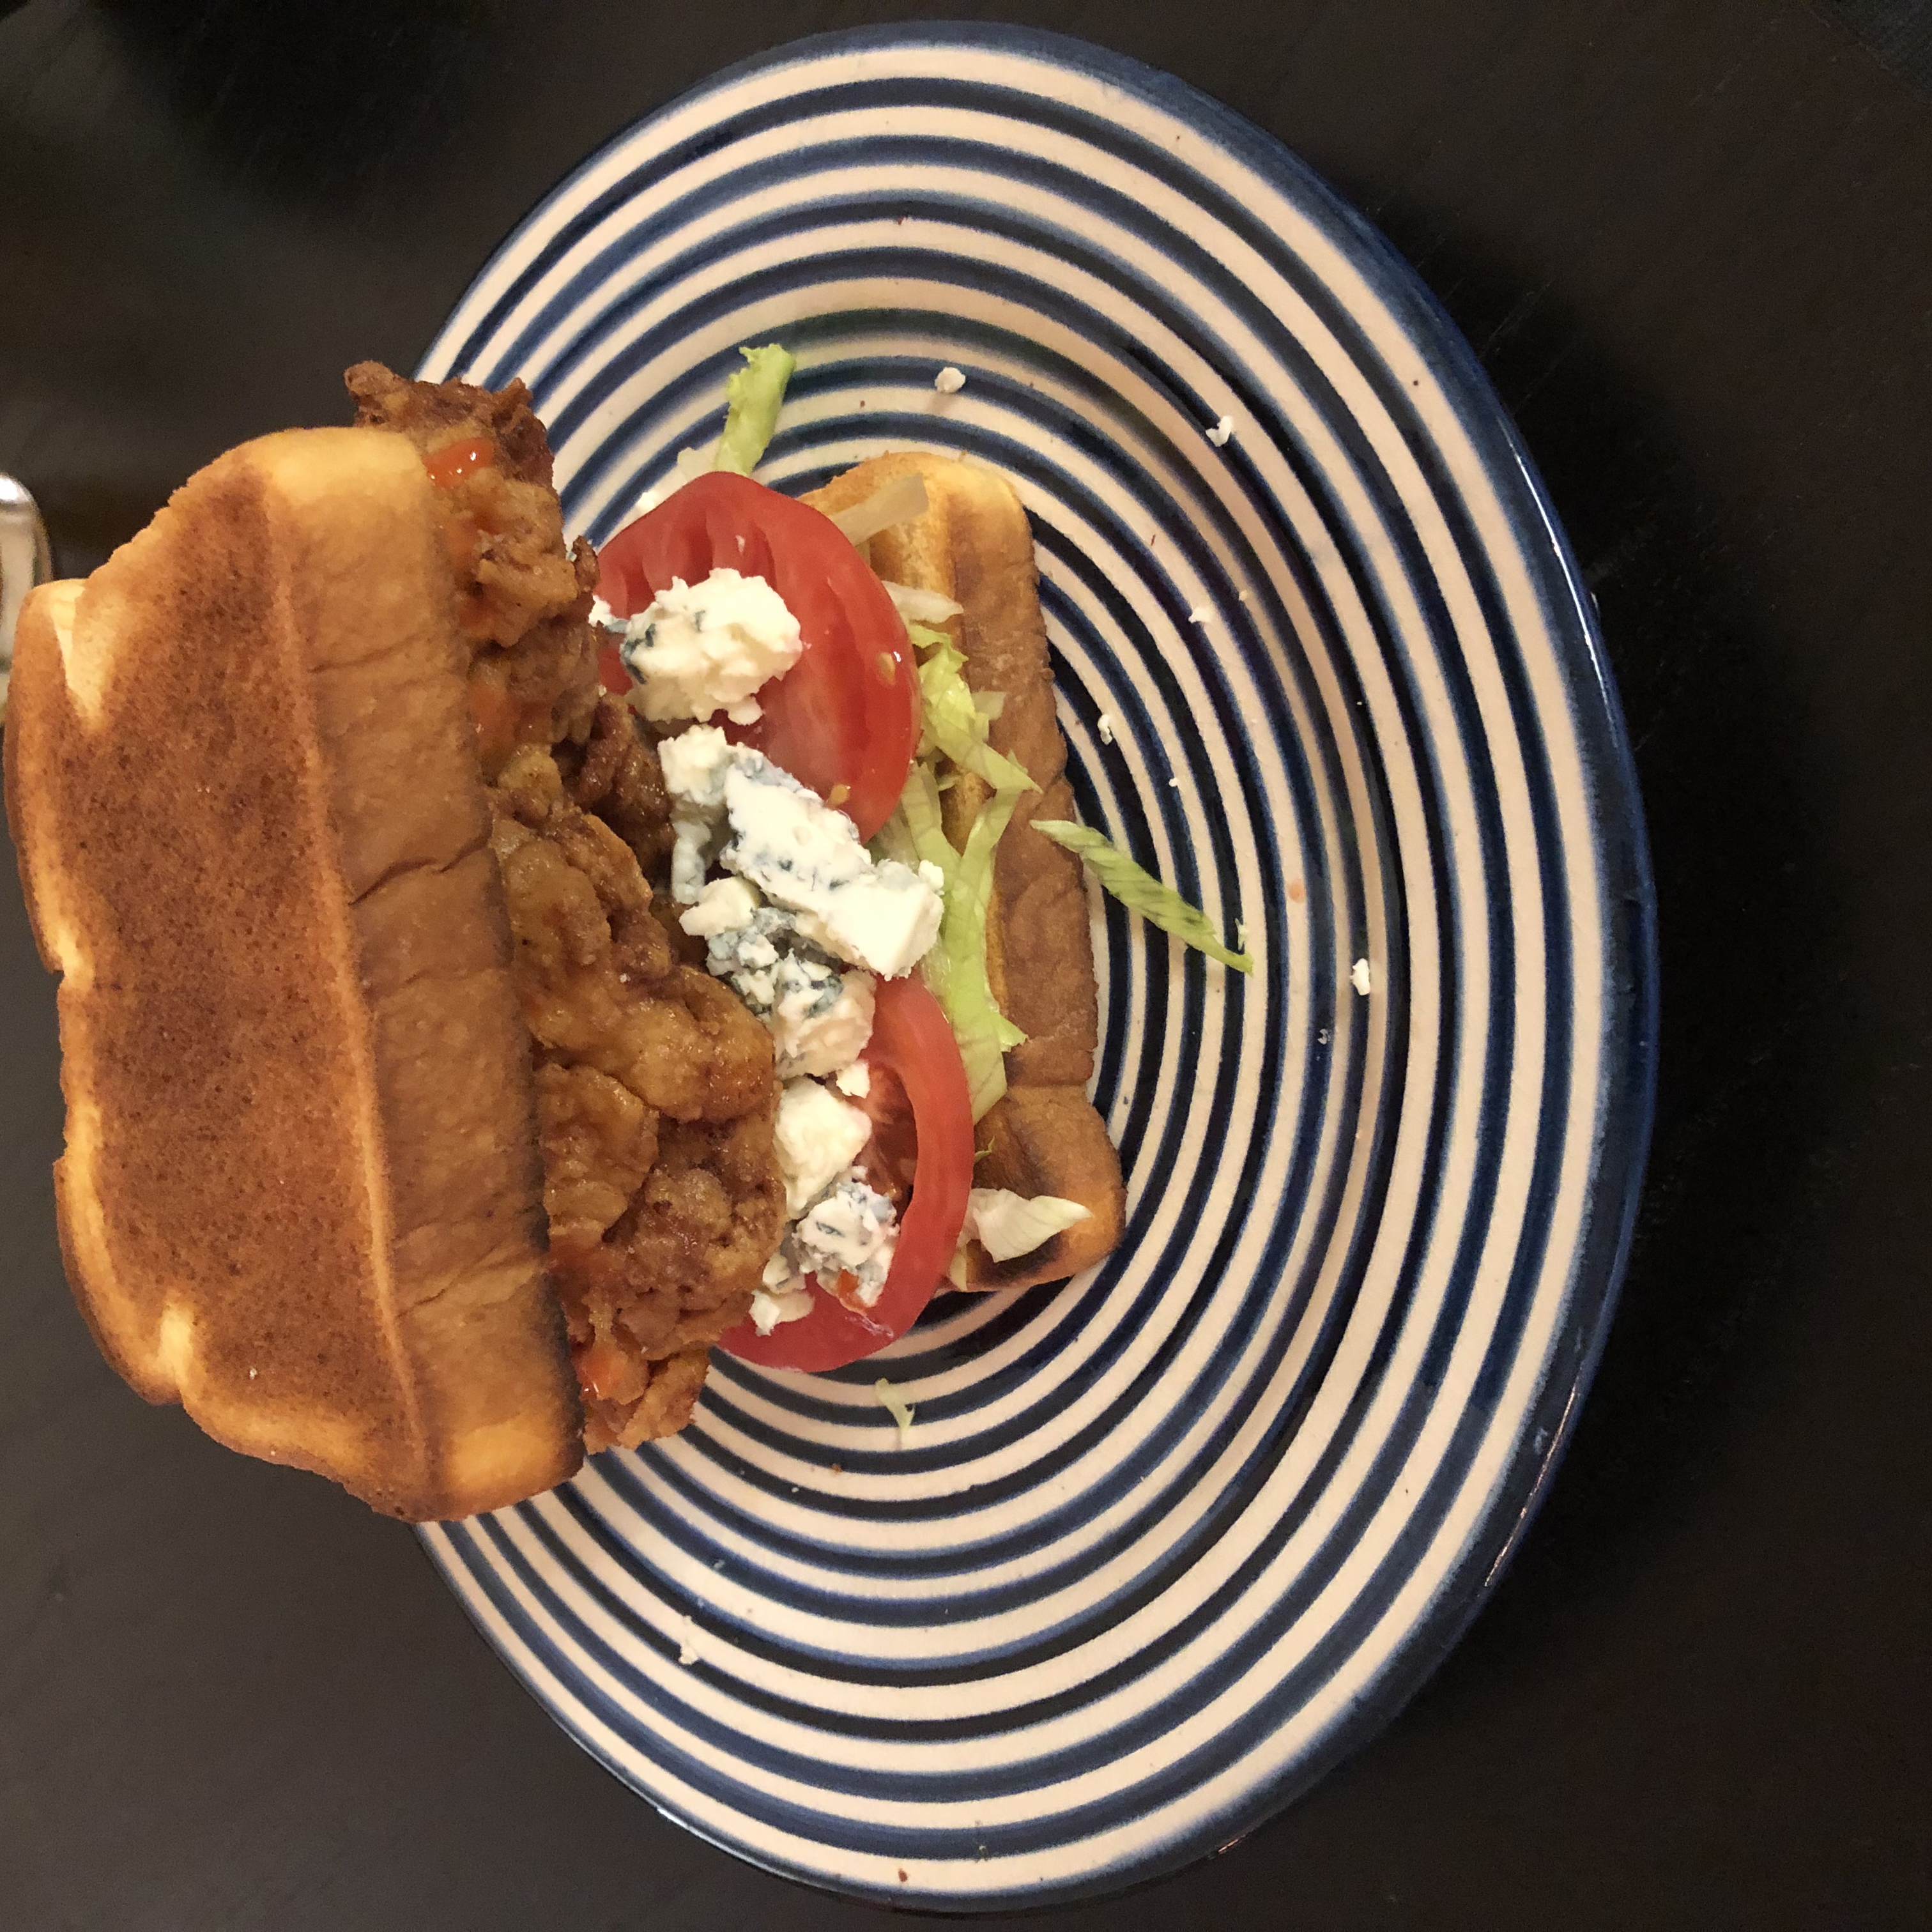 A Buffalo chicken sandwich sitting on a plate